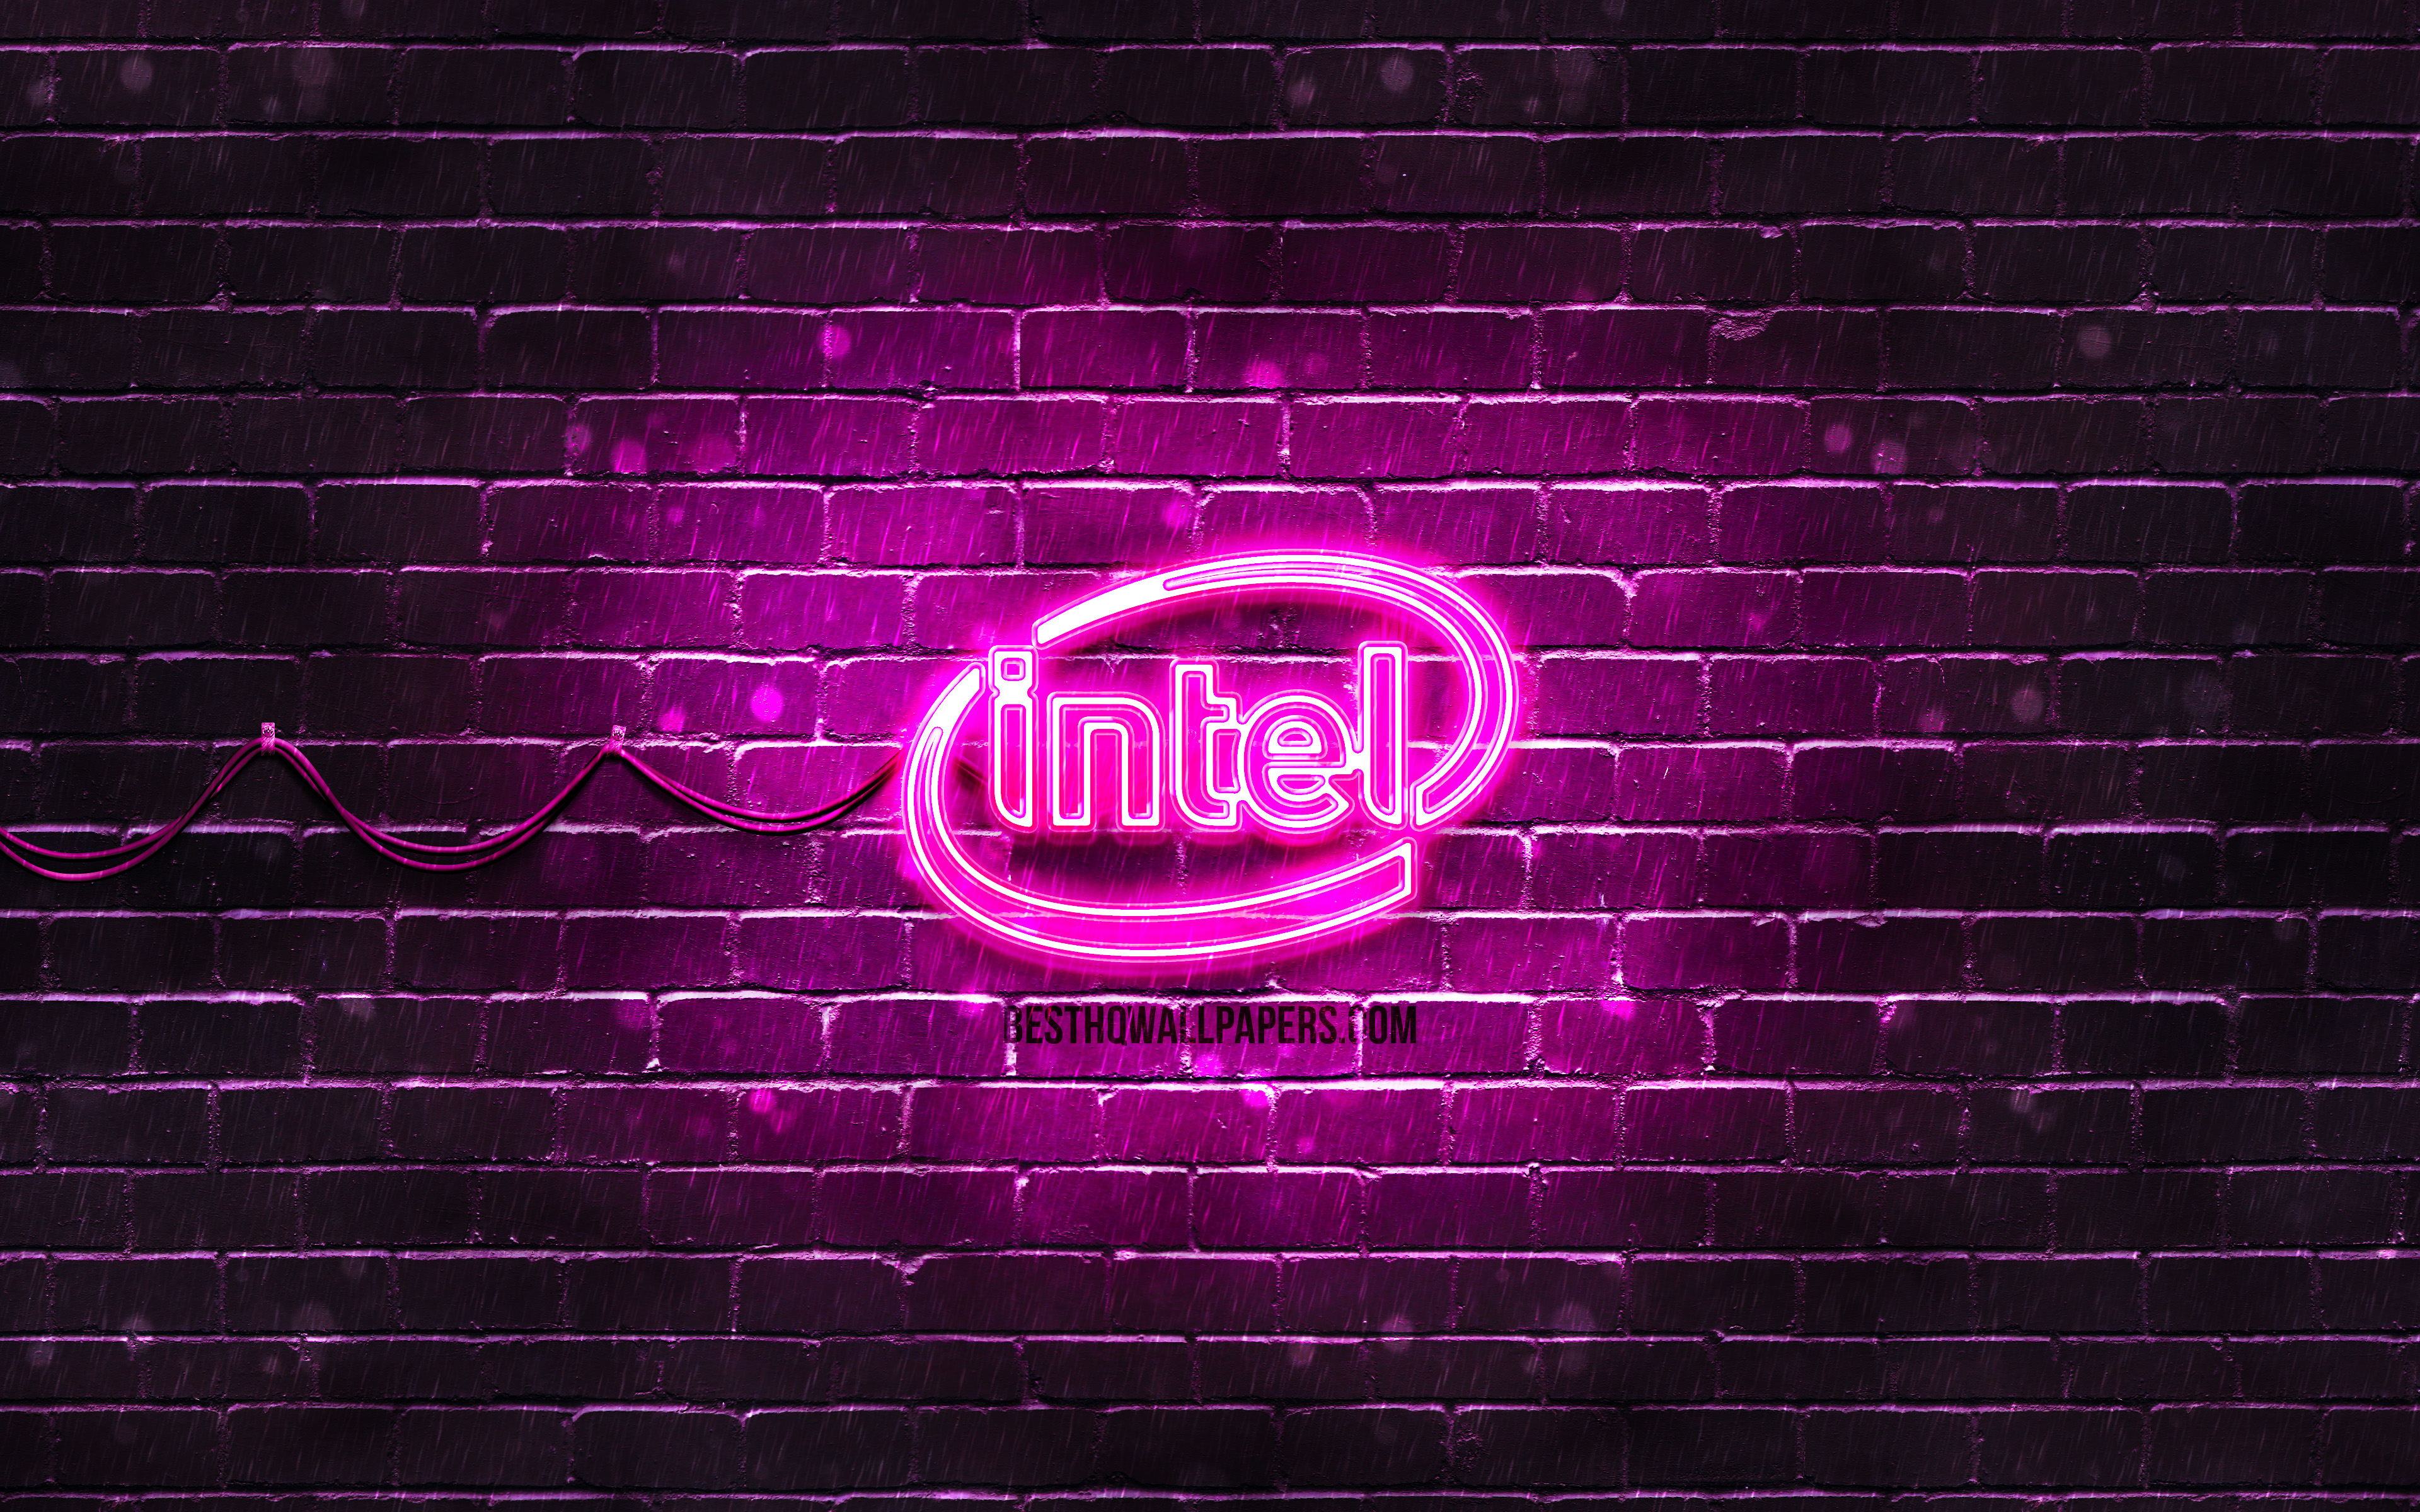 Download wallpaper Intel purple logo, 4k, purple brickwall, Intel logo, brands, Intel neon logo, Intel for desktop with resolution 3840x2400. High Quality HD picture wallpaper